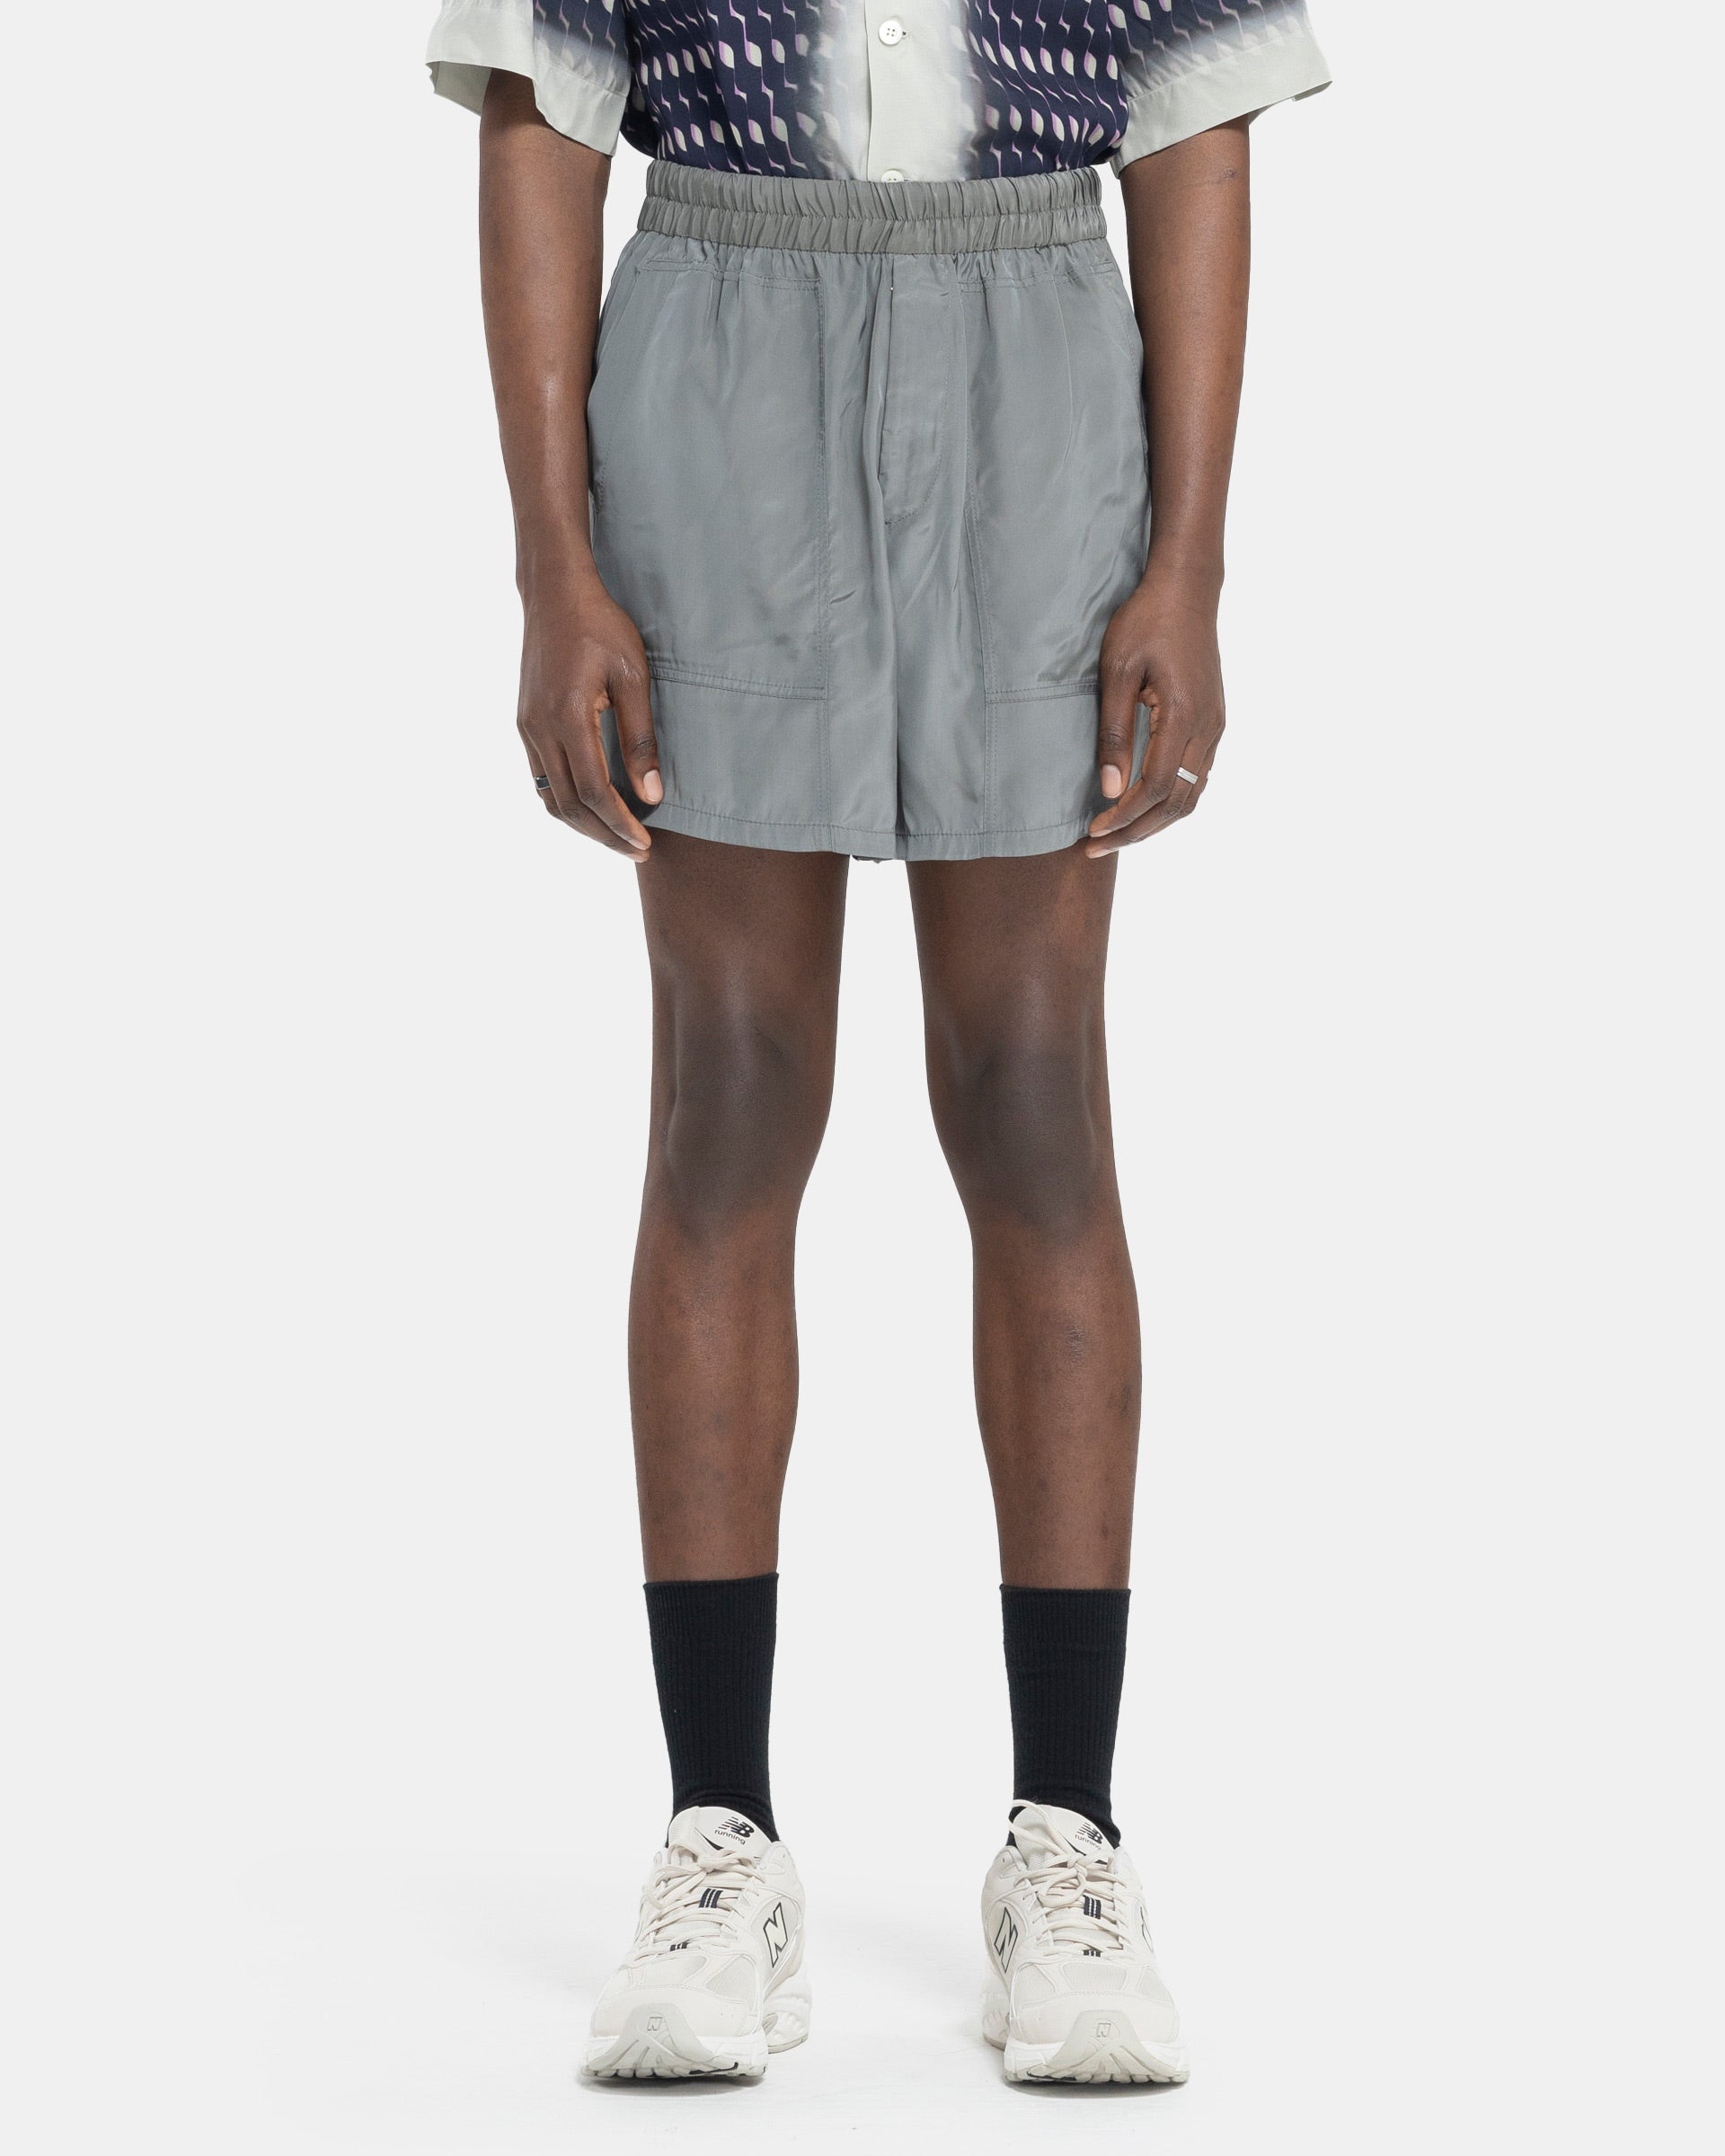 Model wearing Dries Van Noten Pooles Shorts in Grey on white background